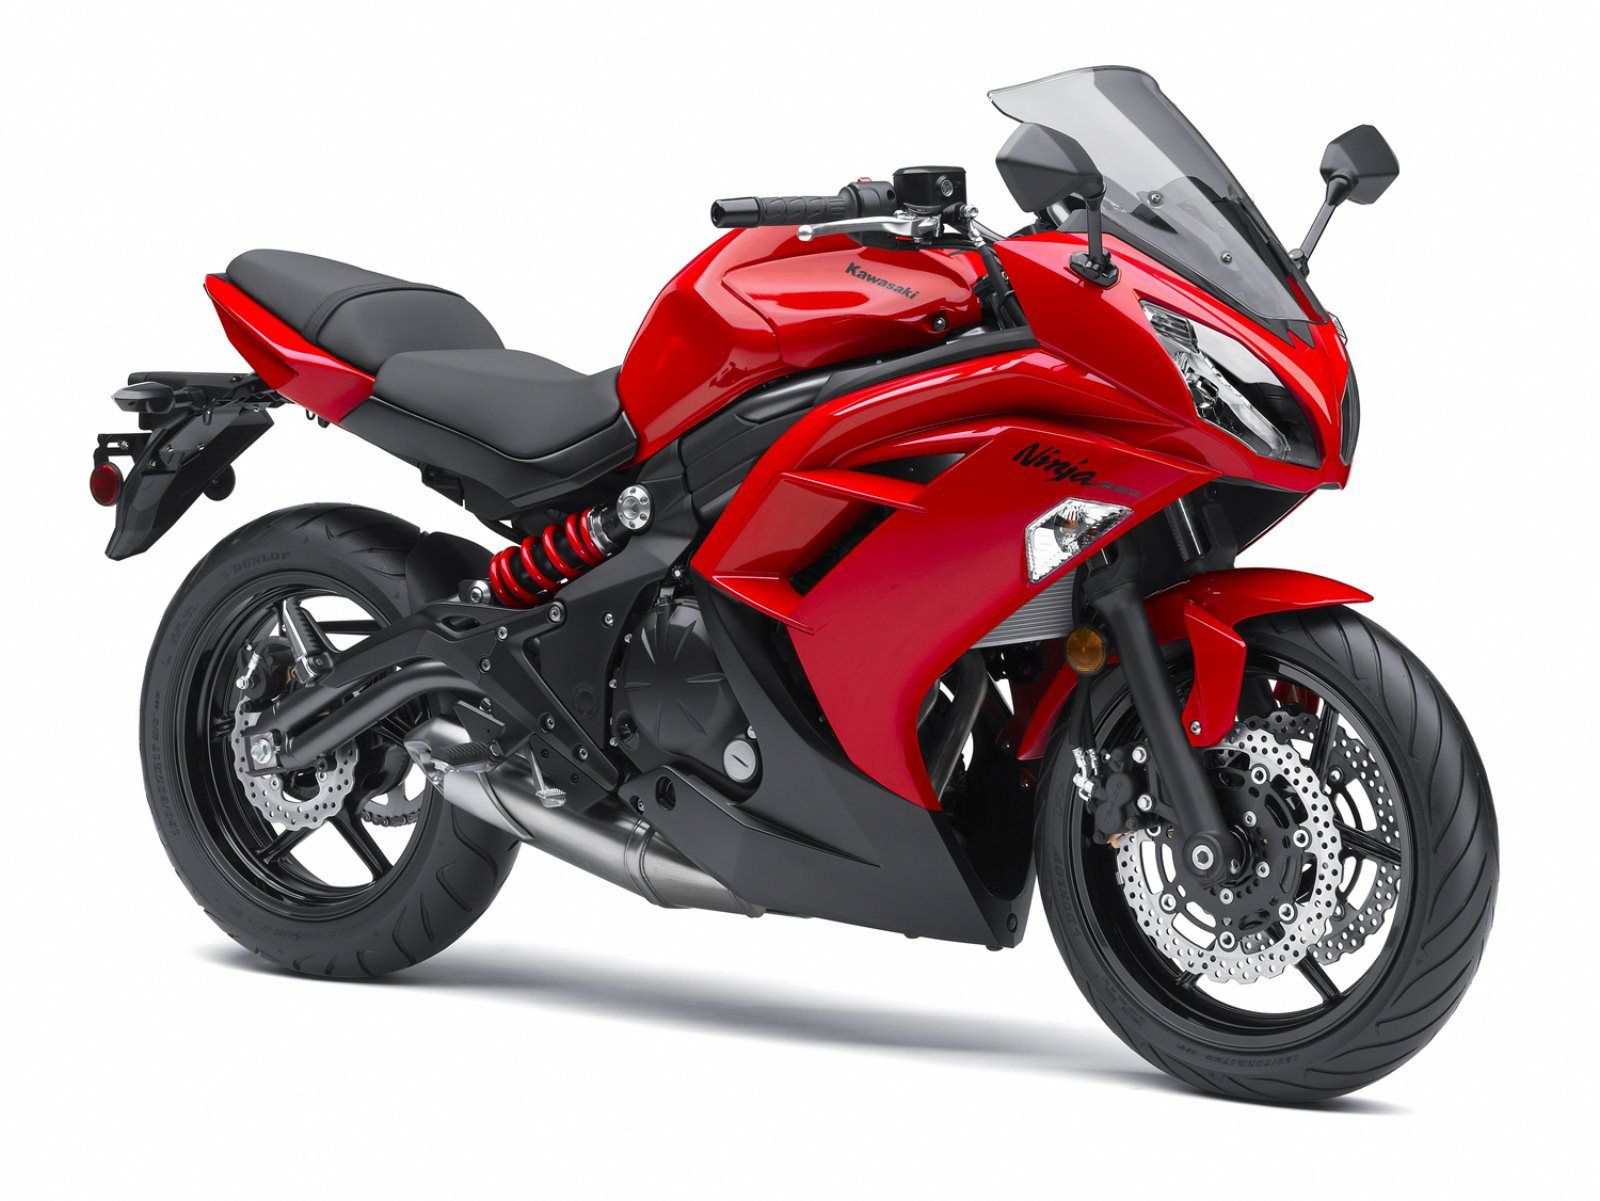 2012 Kawasaki Ninja 650 red on white background